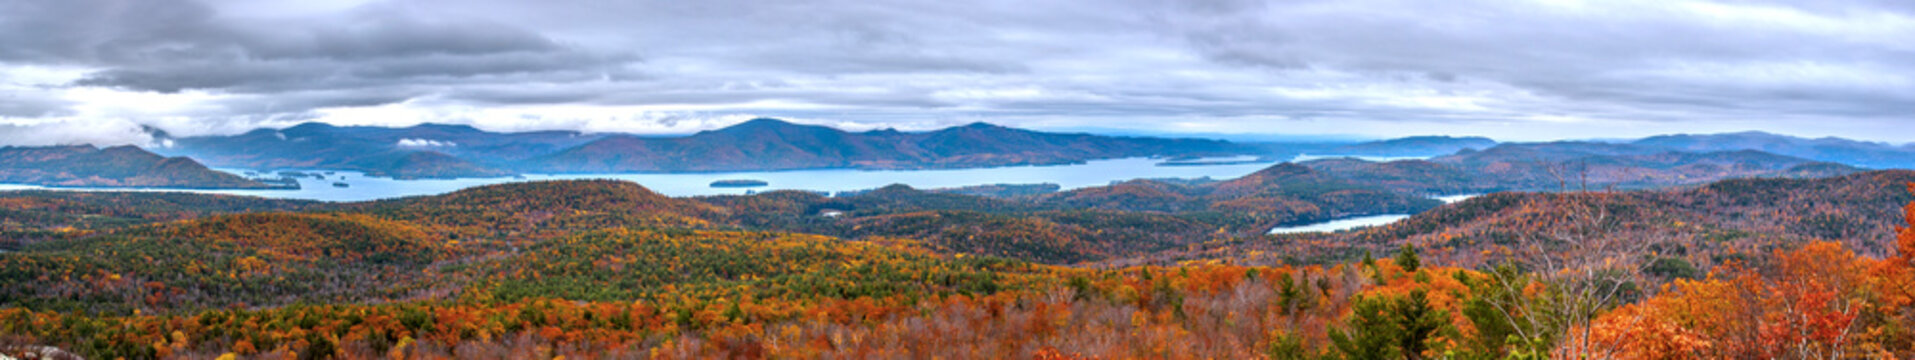 Sleeping Beauty Mountain Lake George Adirondacks Upstate New York Panoramic